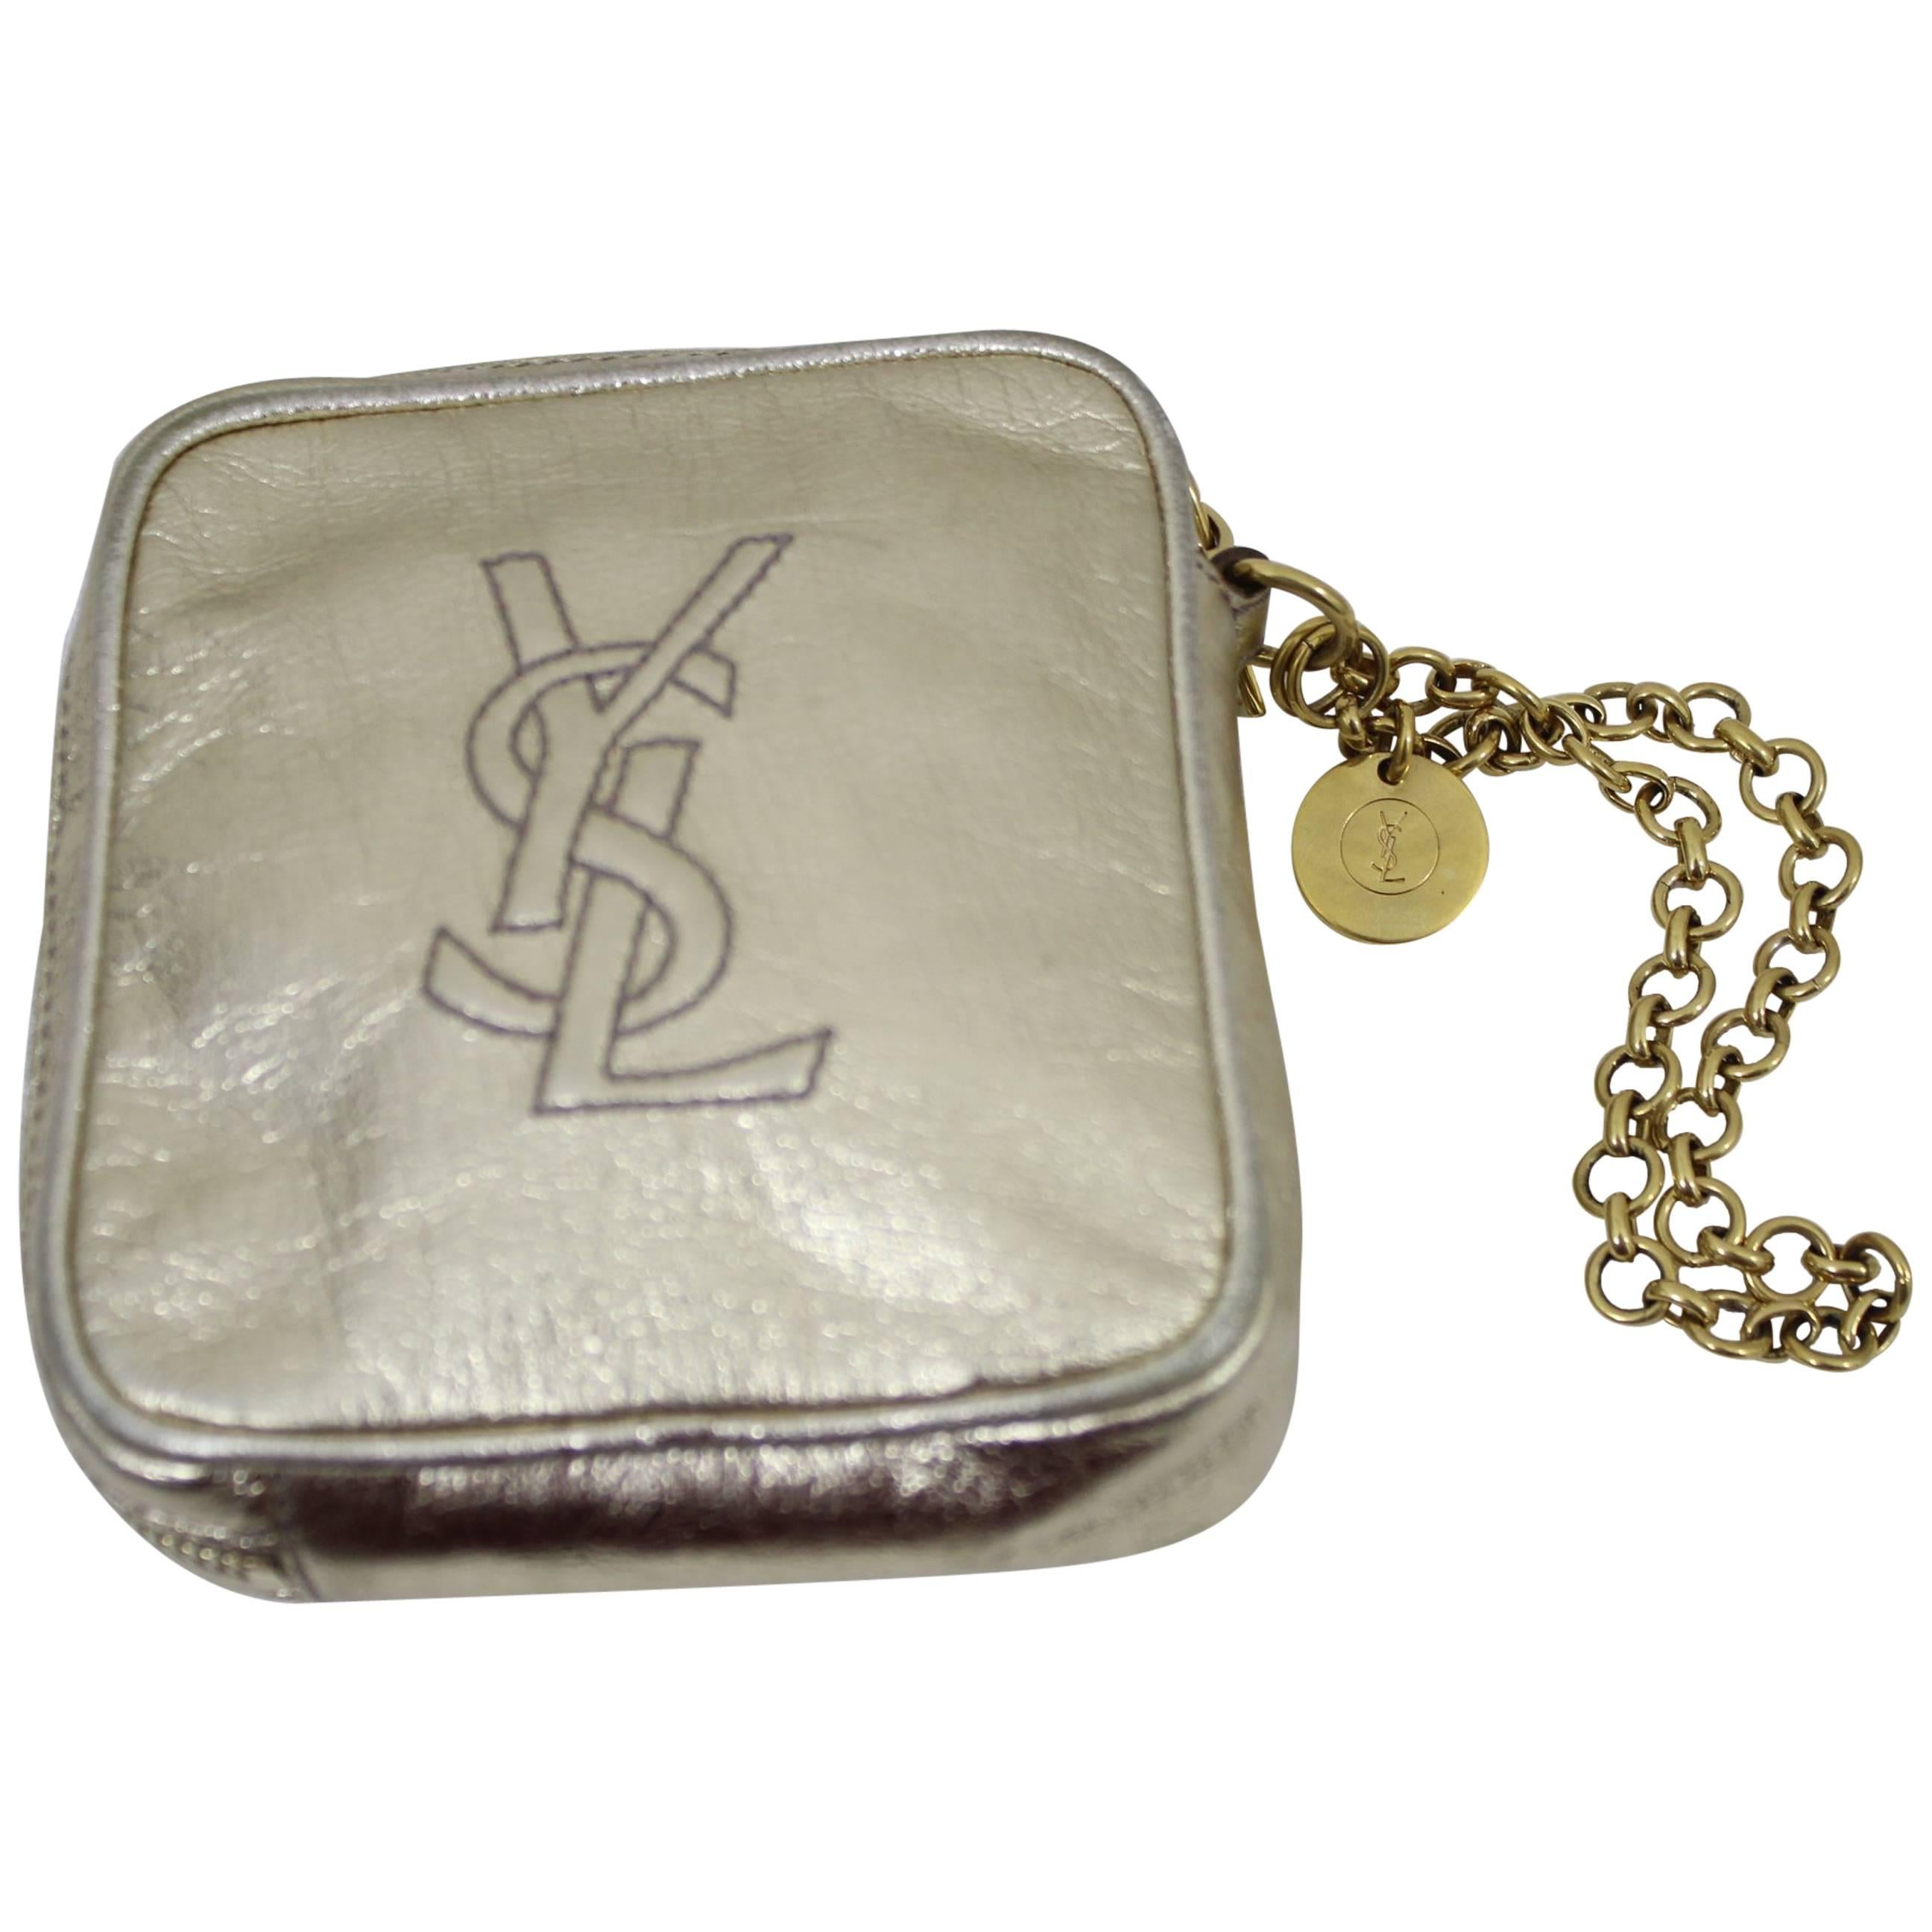 Vintage Yves Saint Laurent Golden Leather Small Evening bag